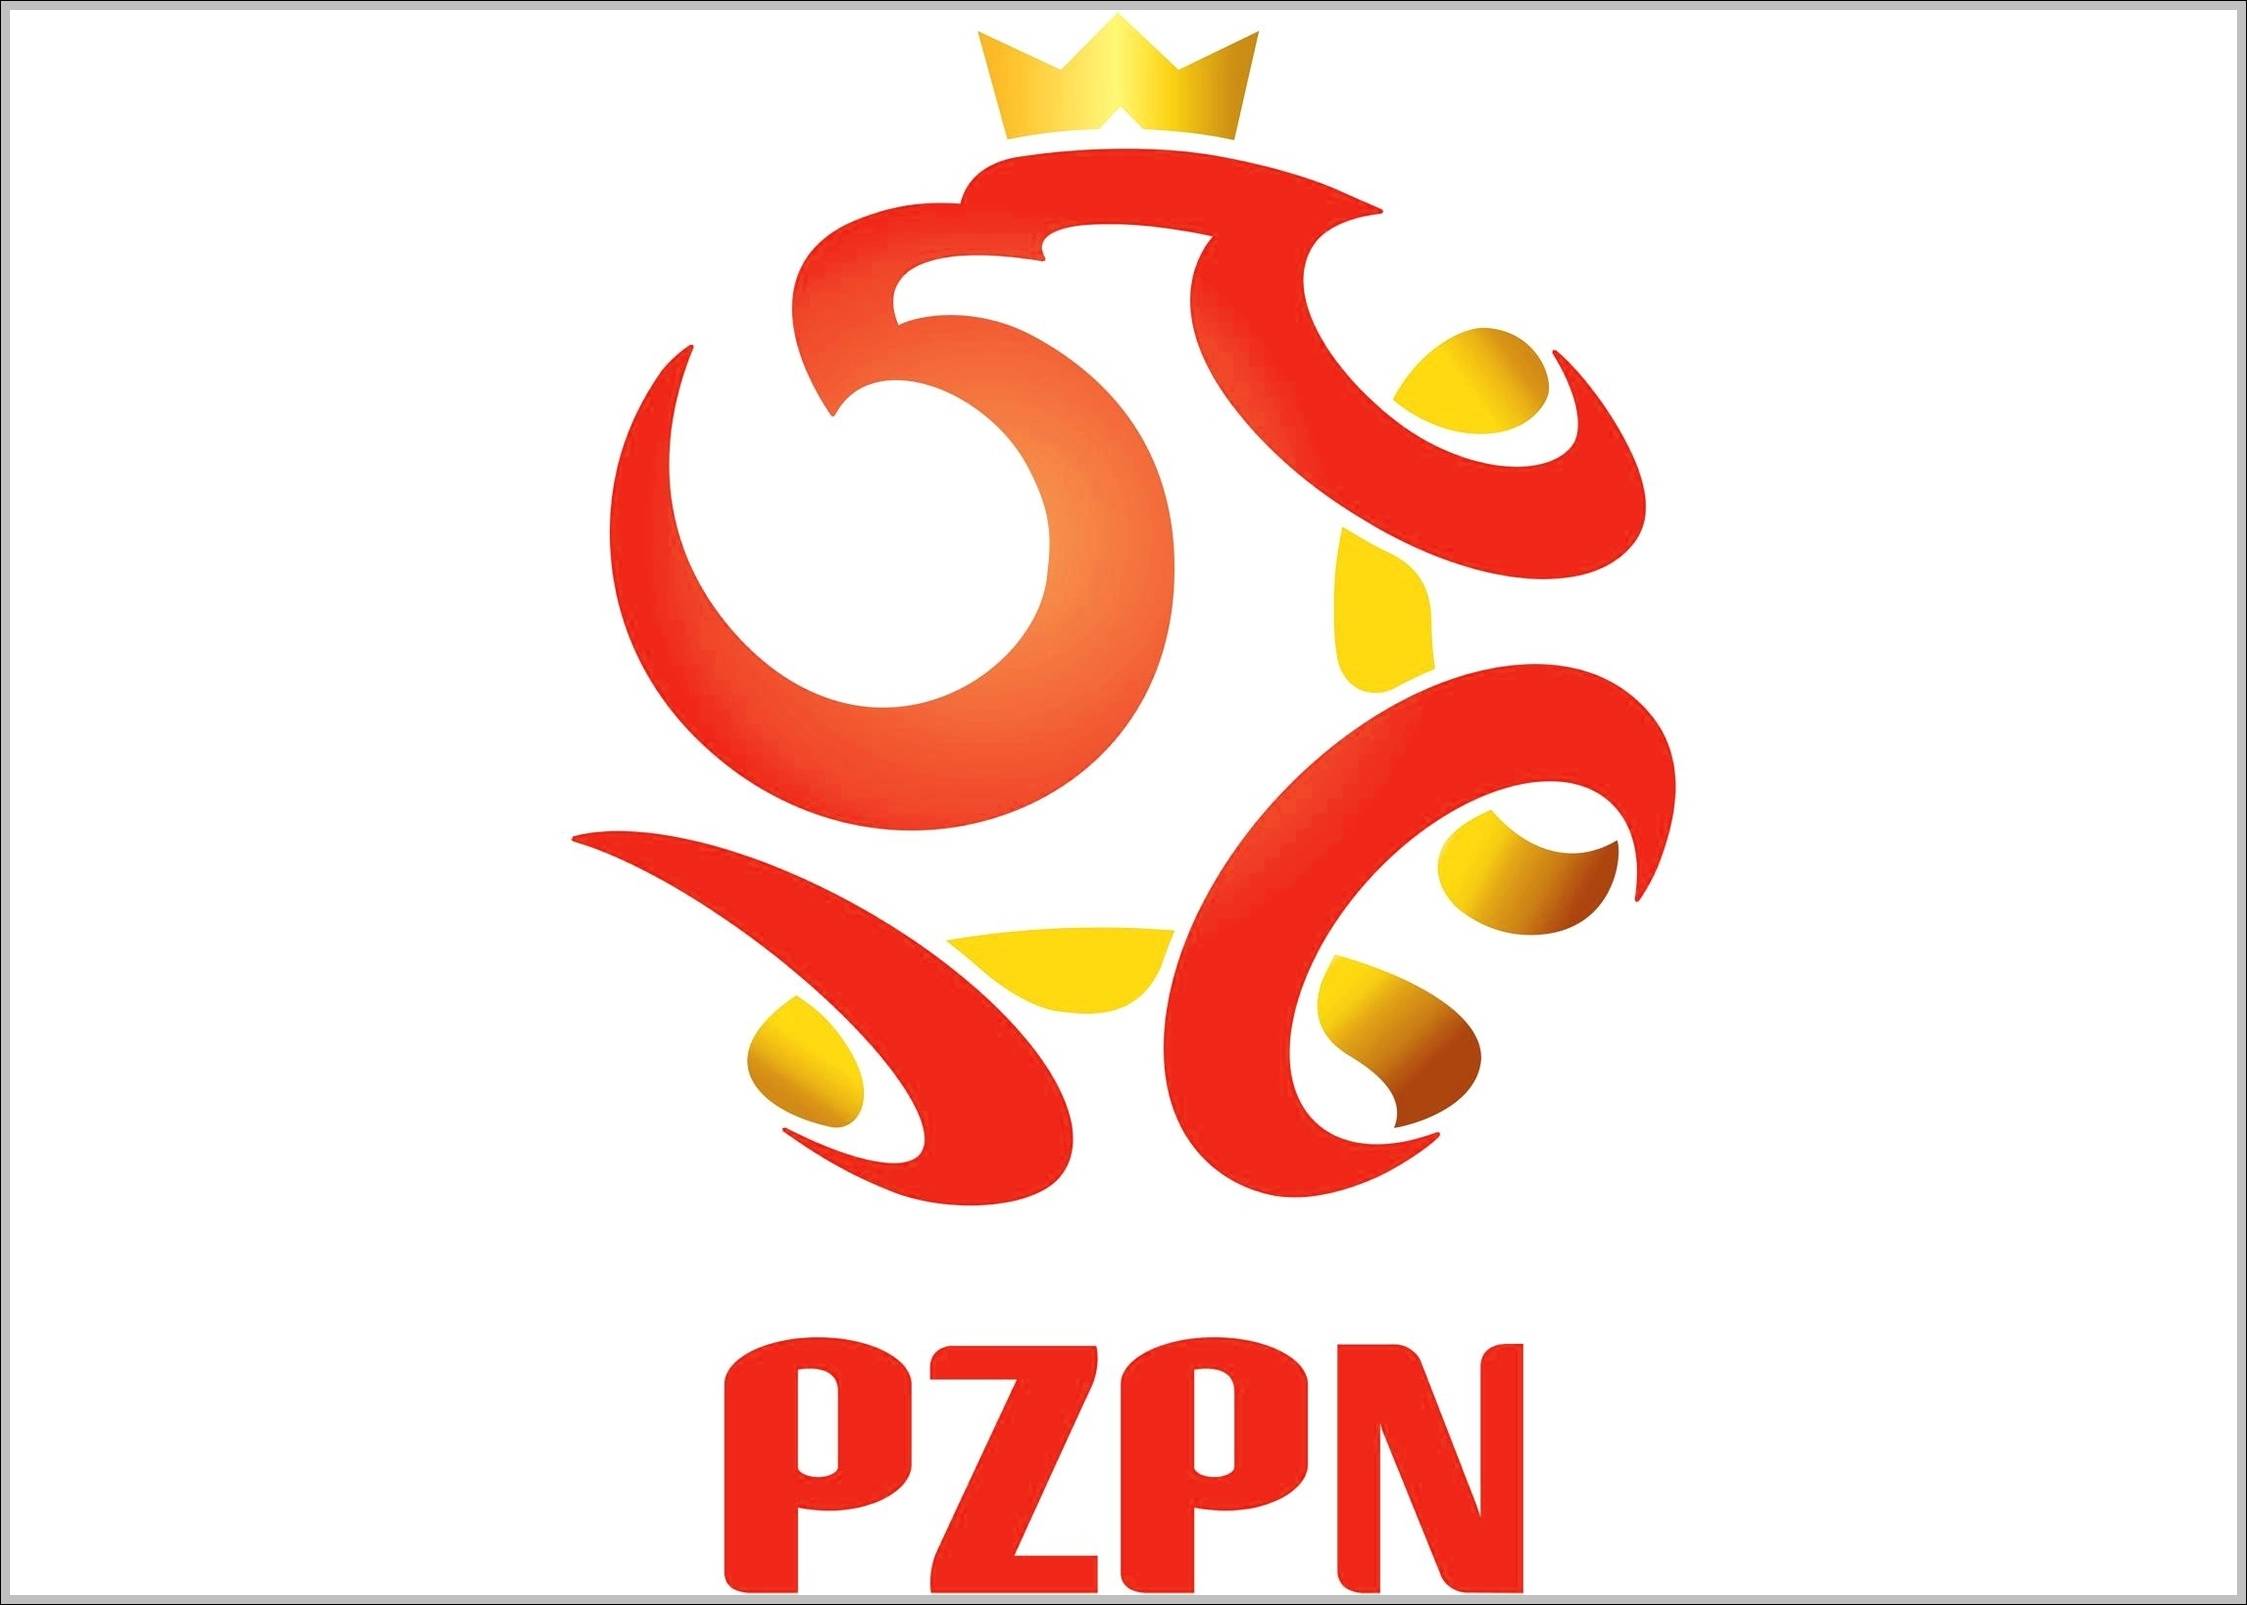 PZPN sign